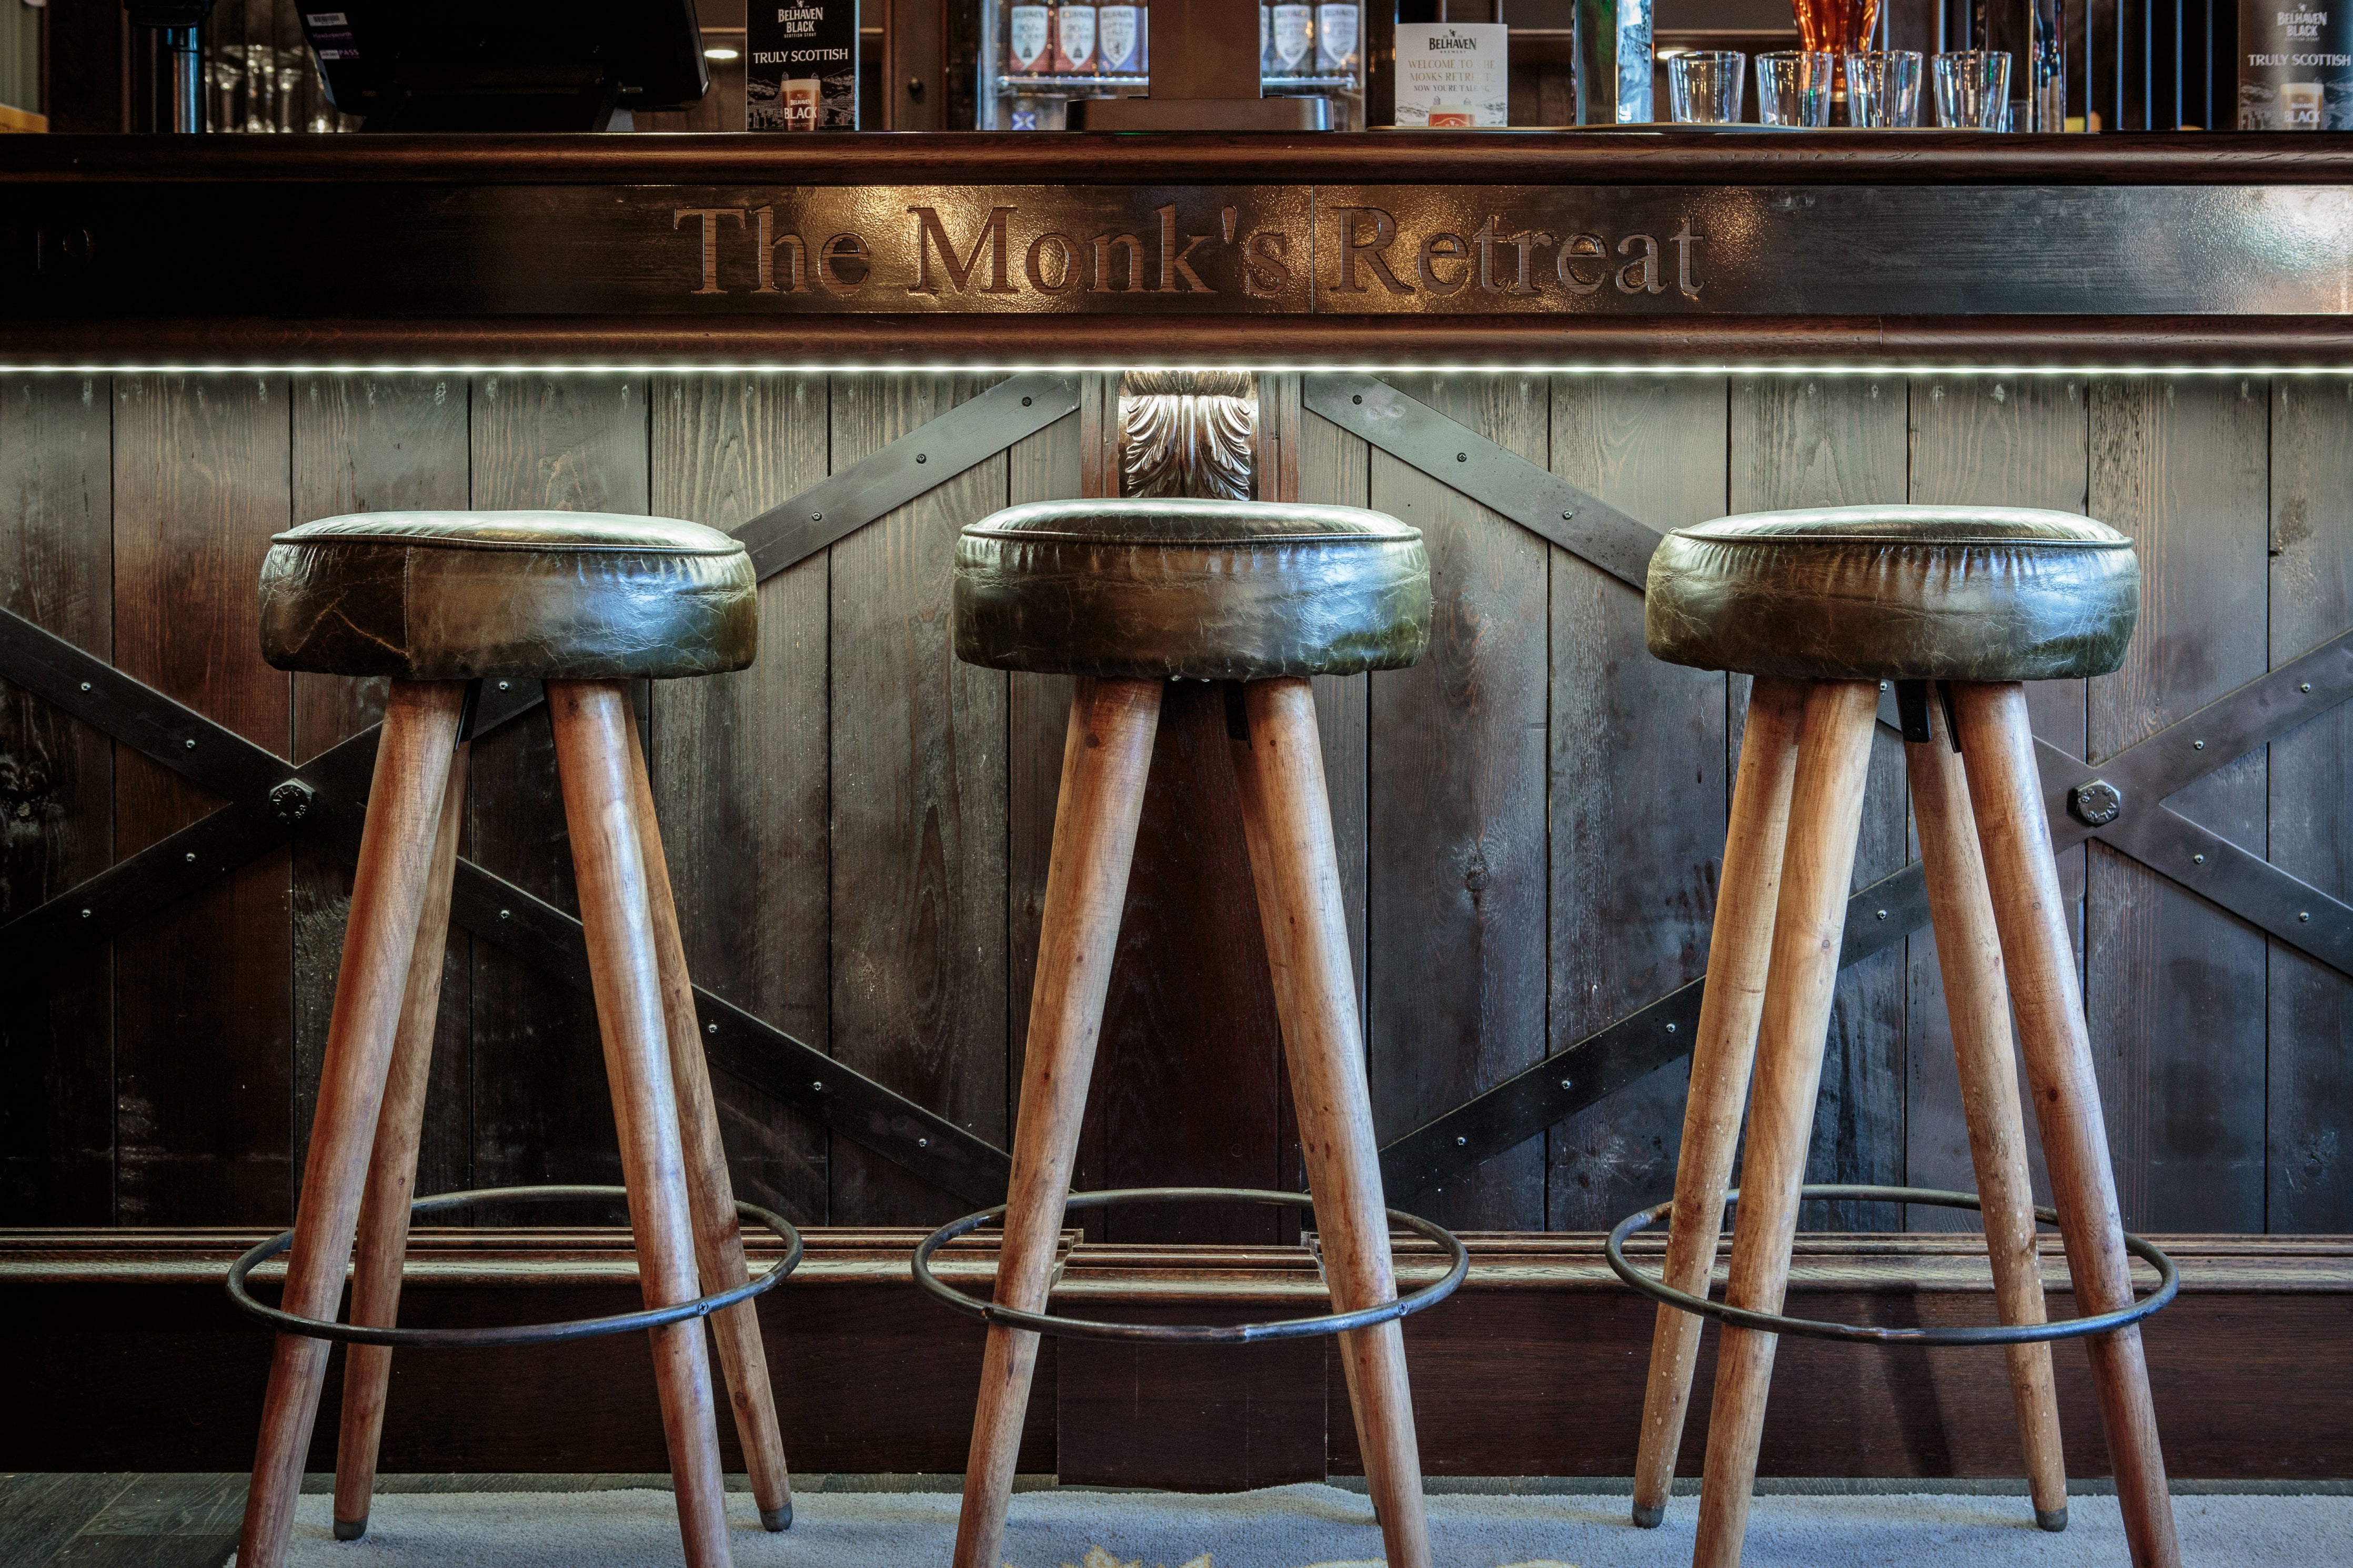 The Monks Retreat pub bar and barstools